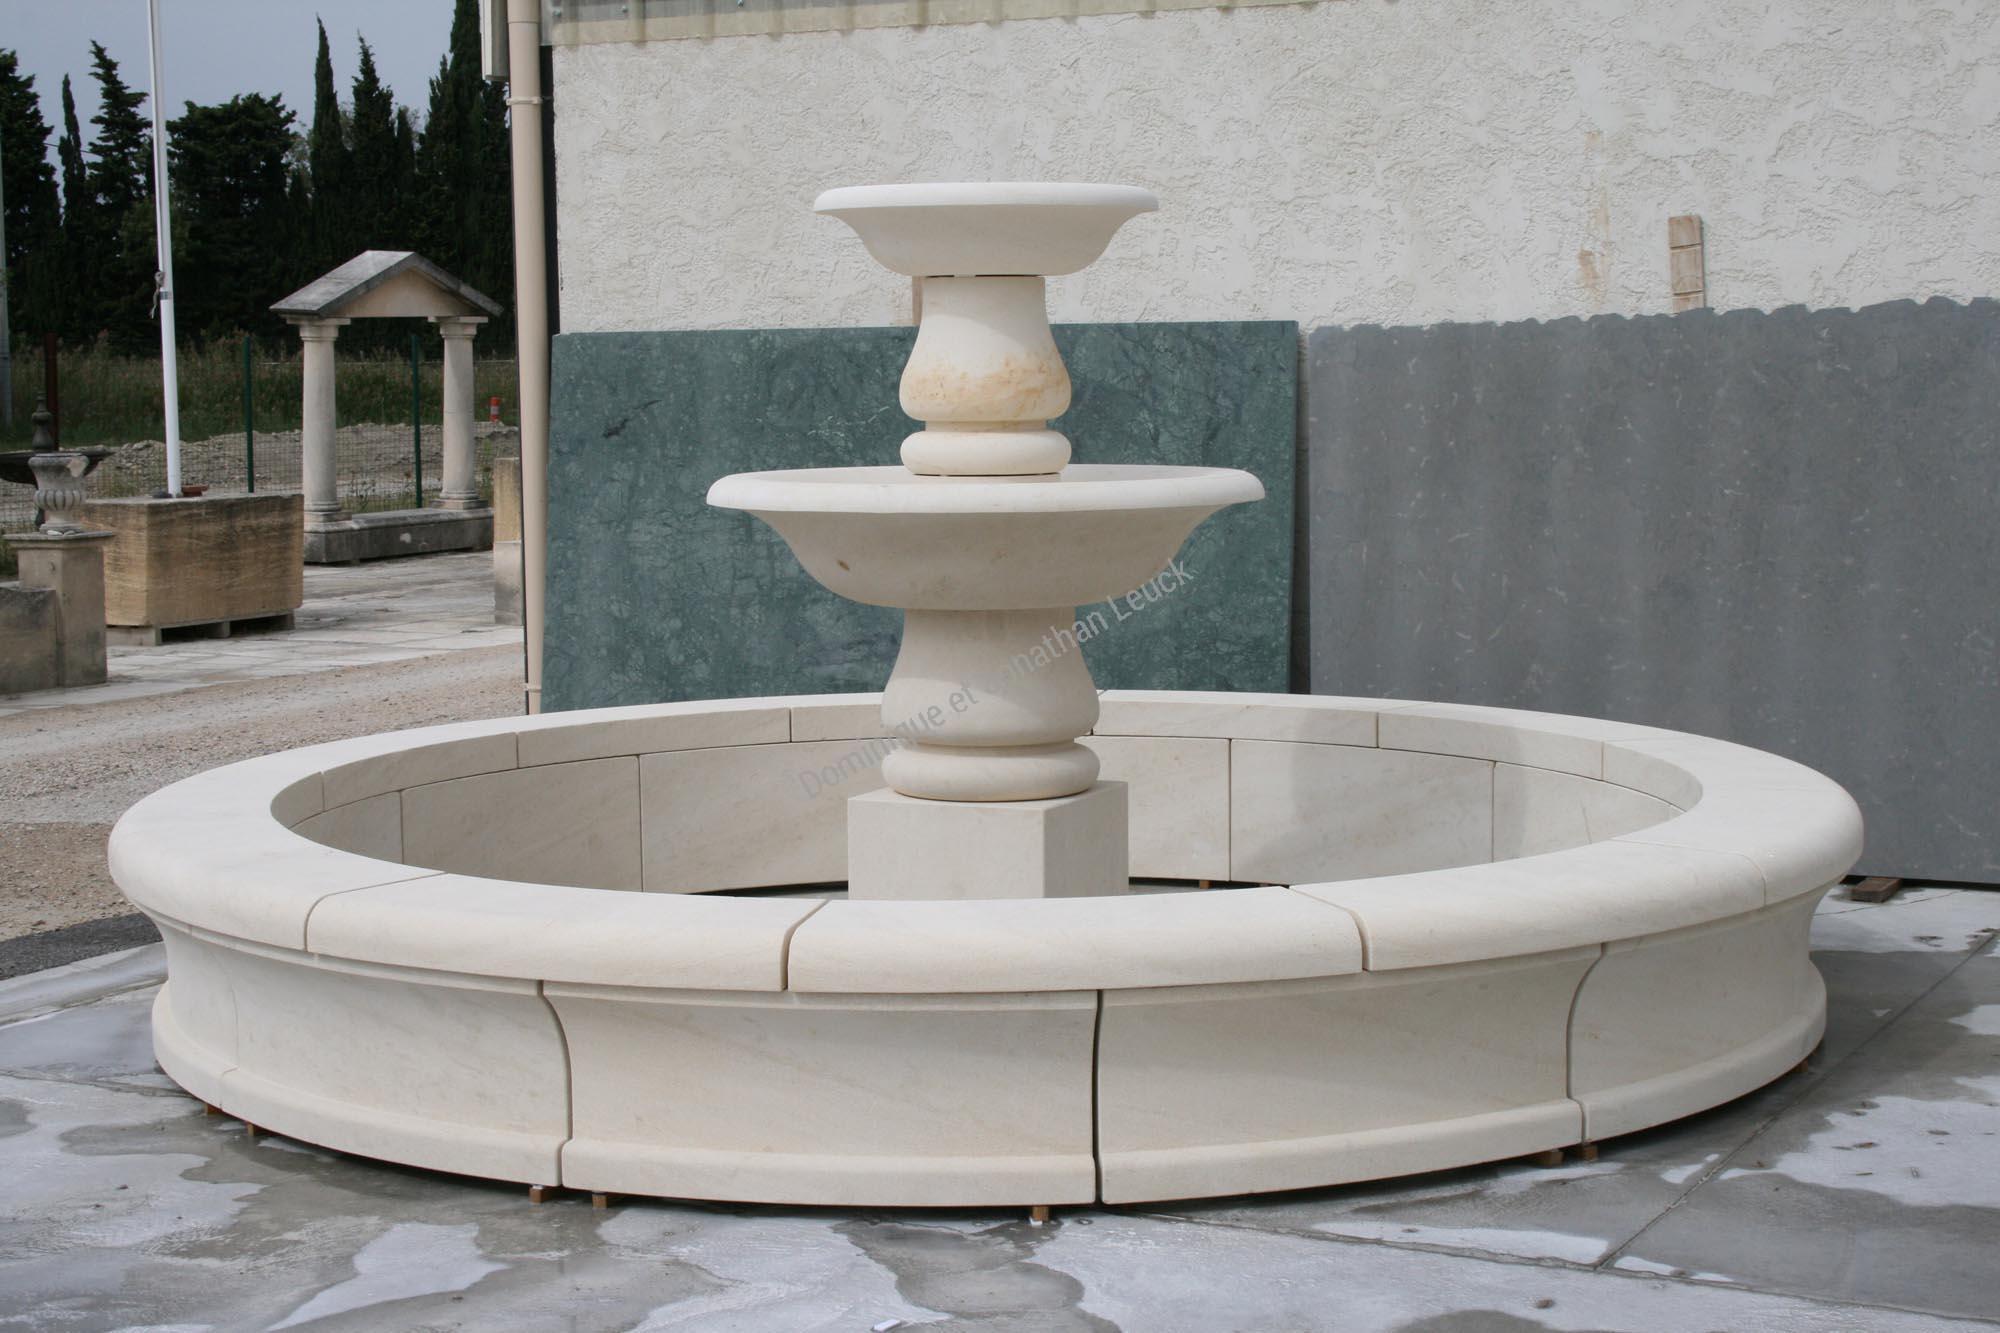 Fontaine circulaire Marignane en pierre d'Estaillades